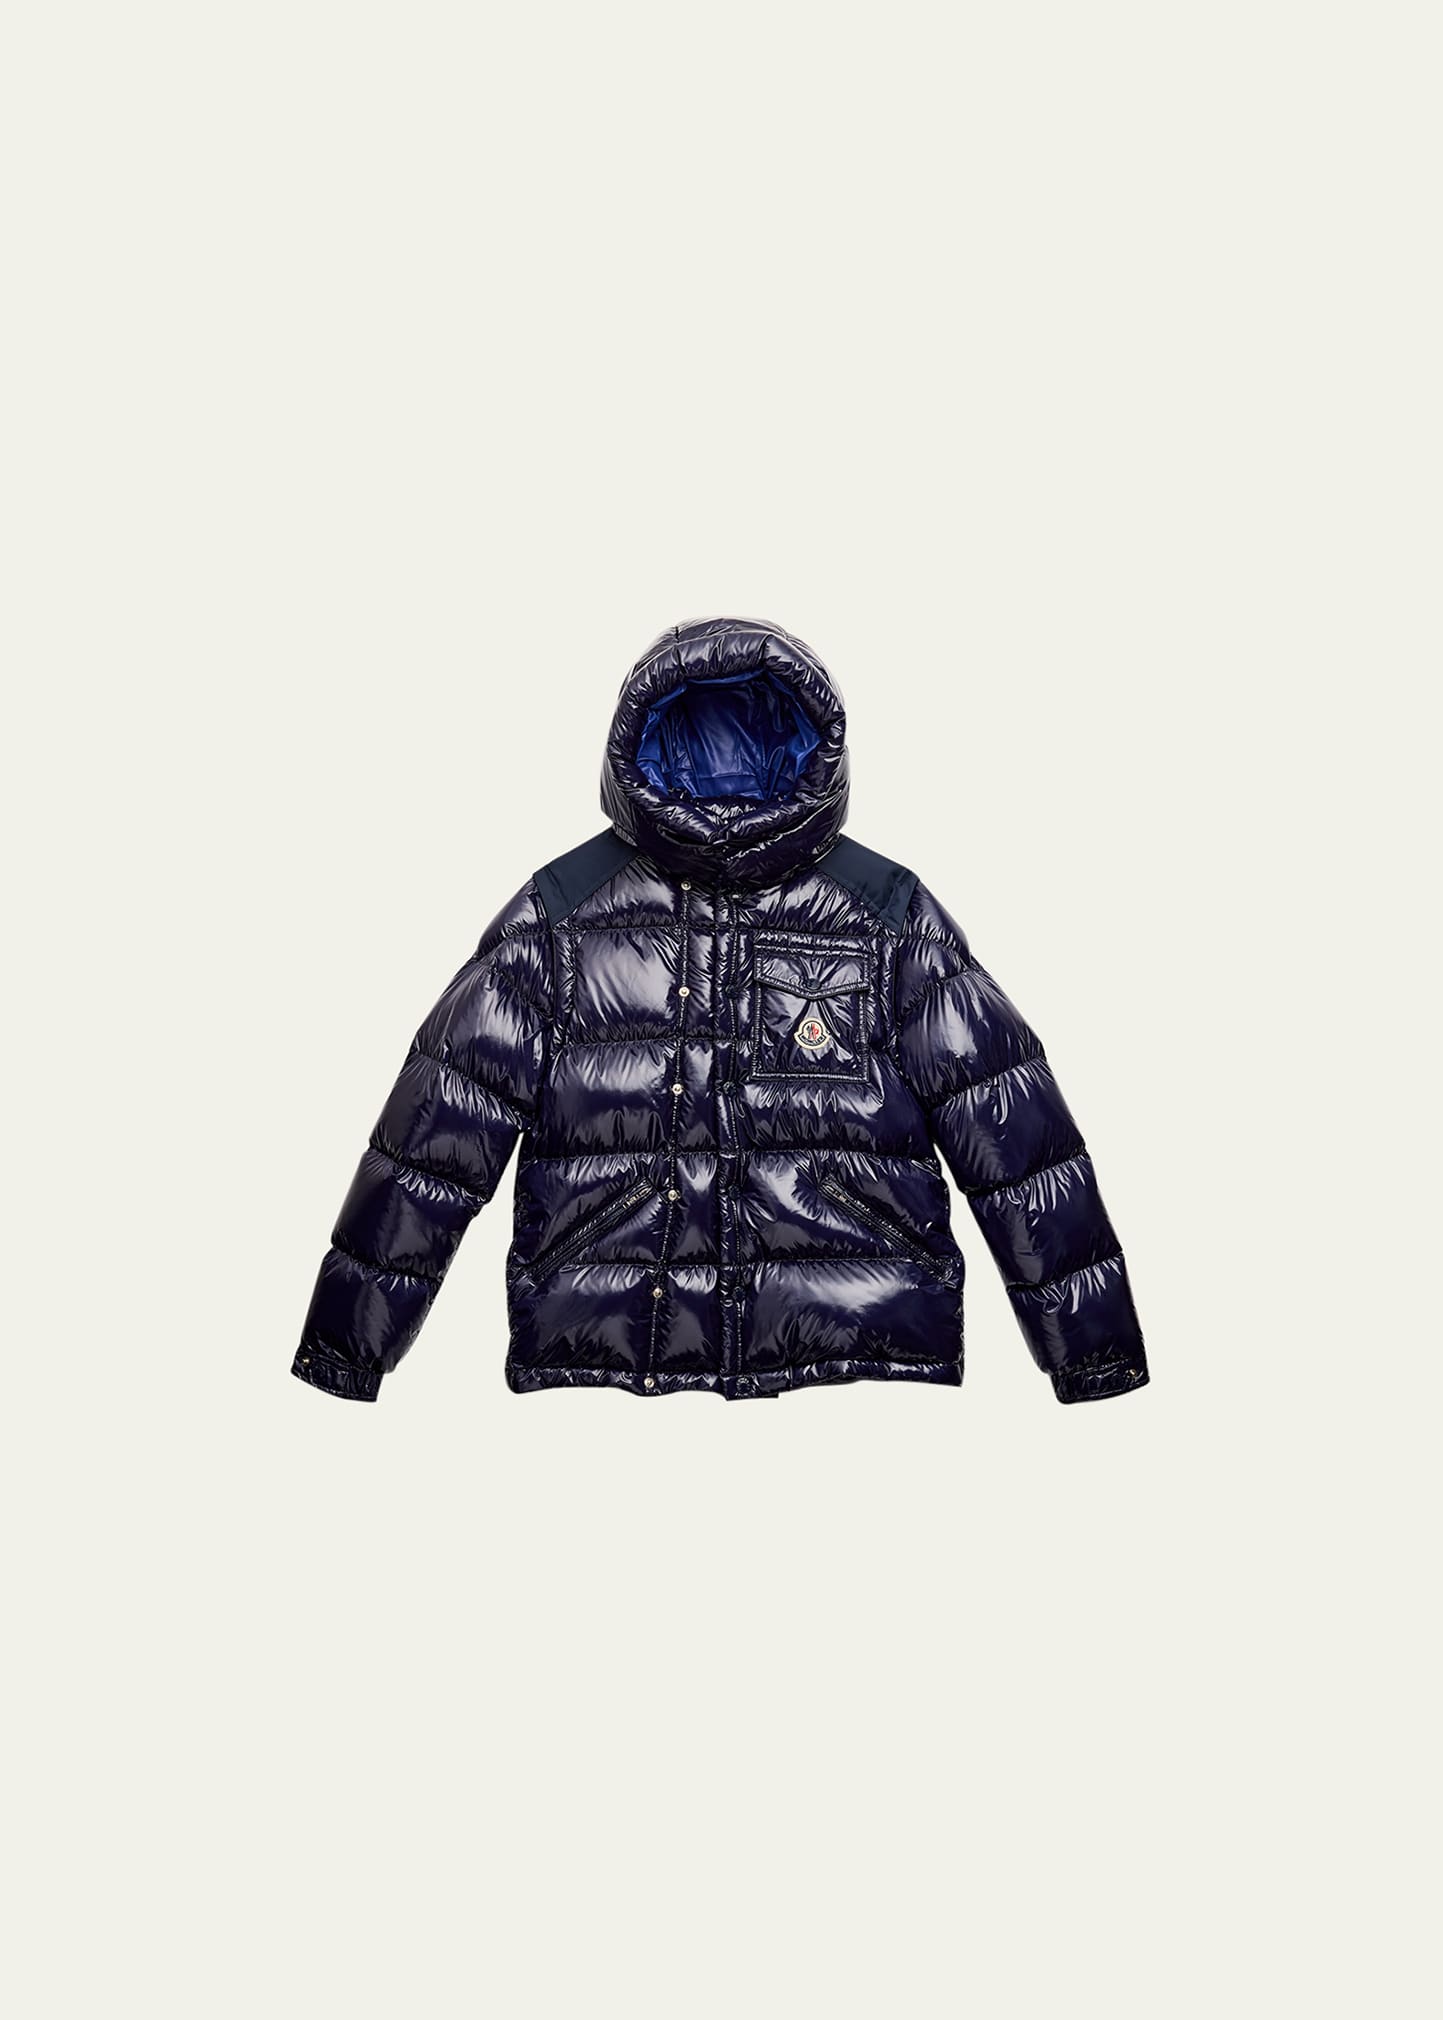 Kid's Karakorum Puffer Jacket, Size 8-14